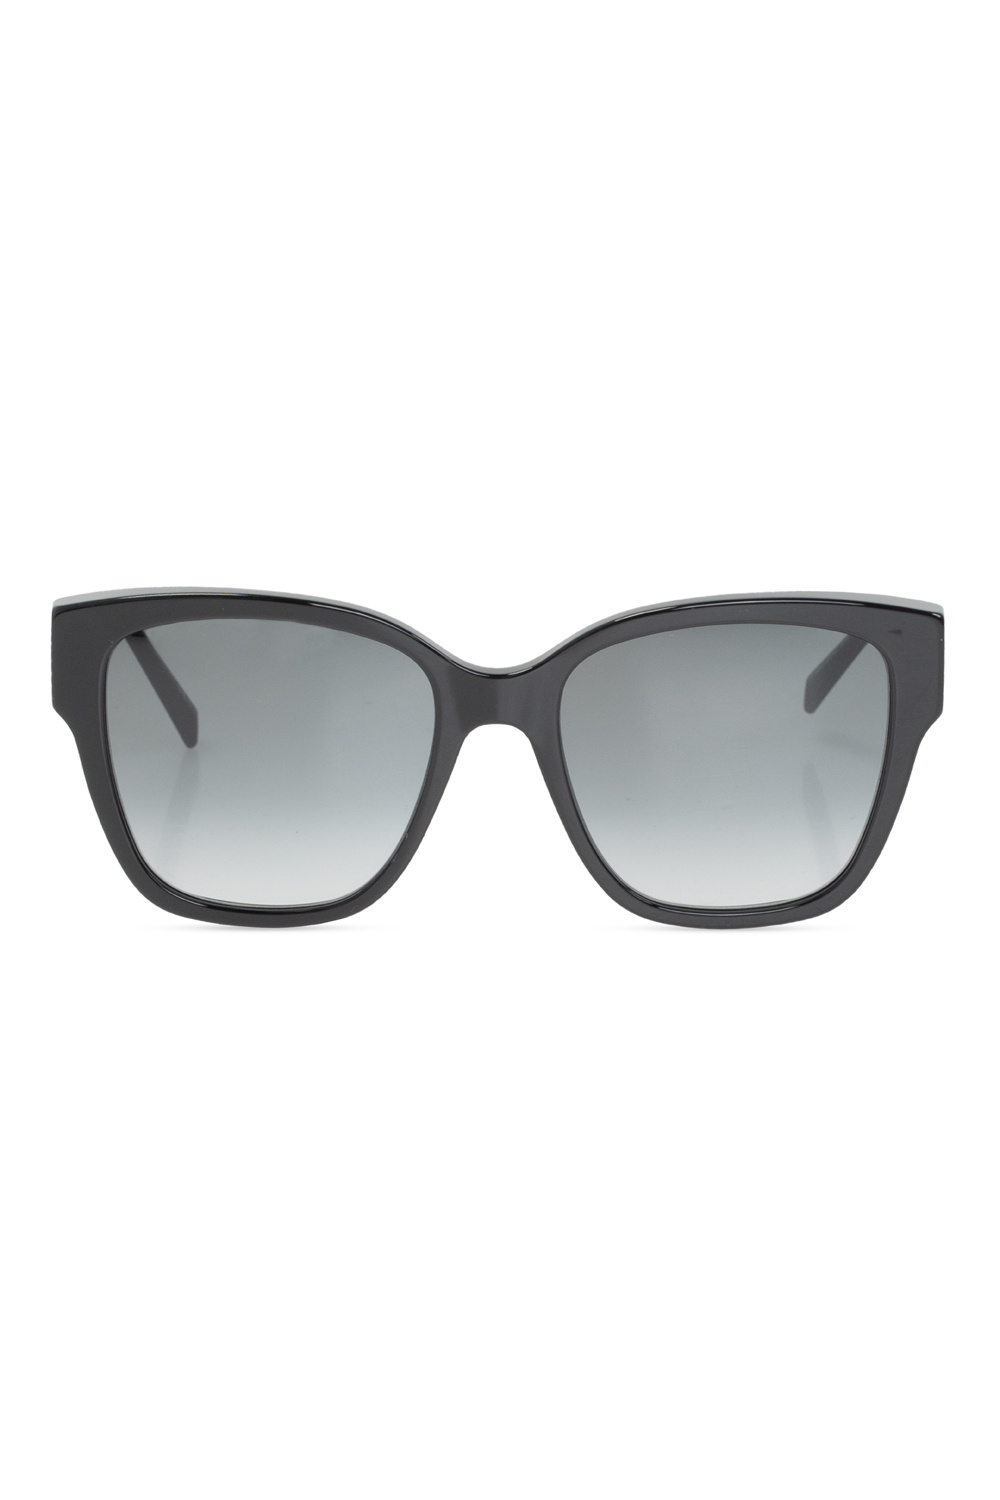 Givenchy lisa 002 sunglasses